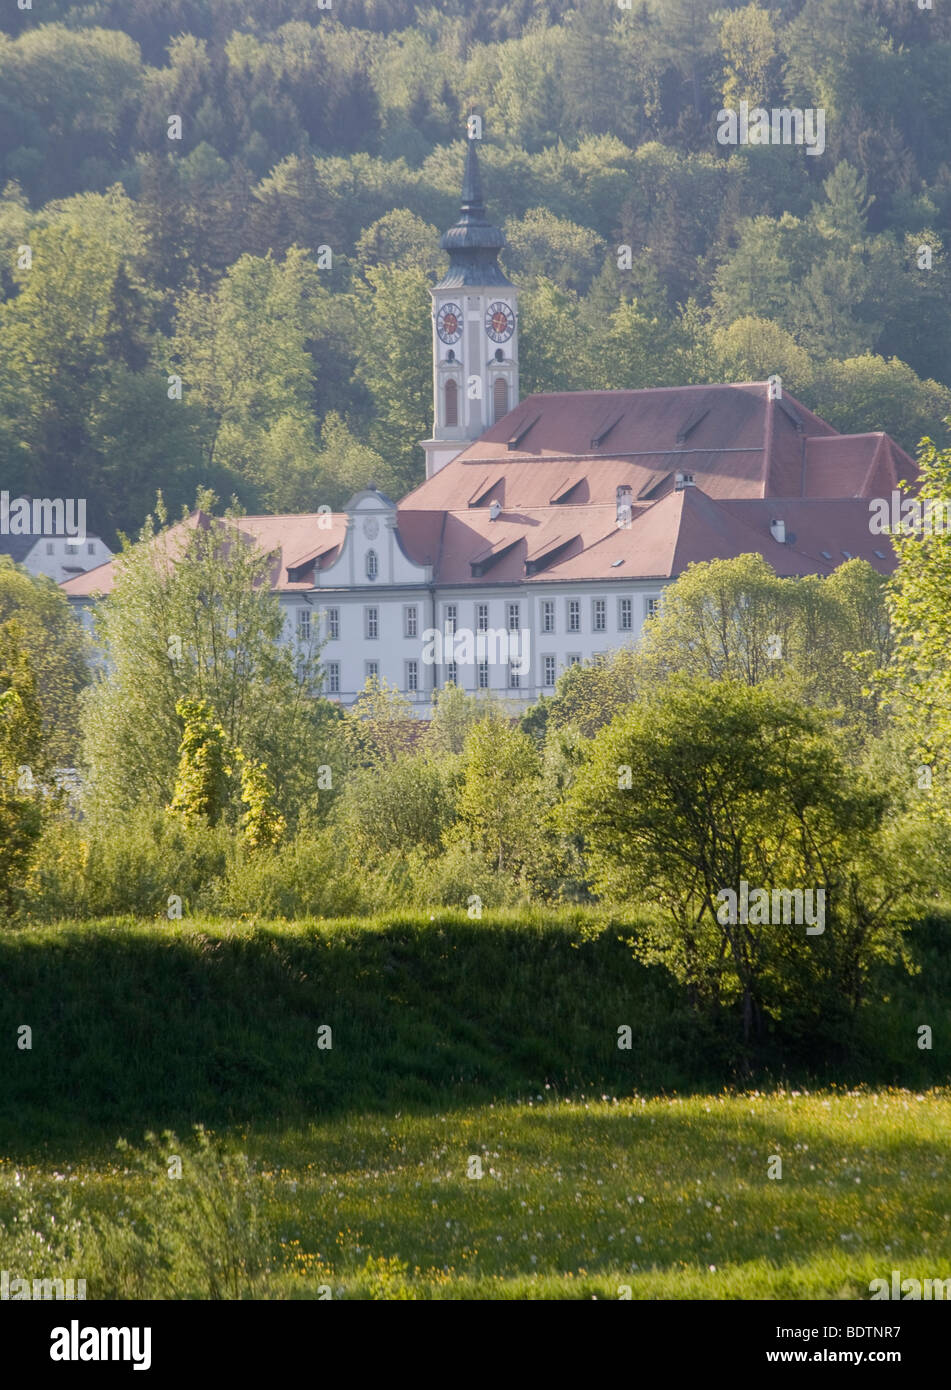 kloster schaeftlarn, bayern, deutschland, schaeftlarn abbey, bavaria, germany Stock Photo